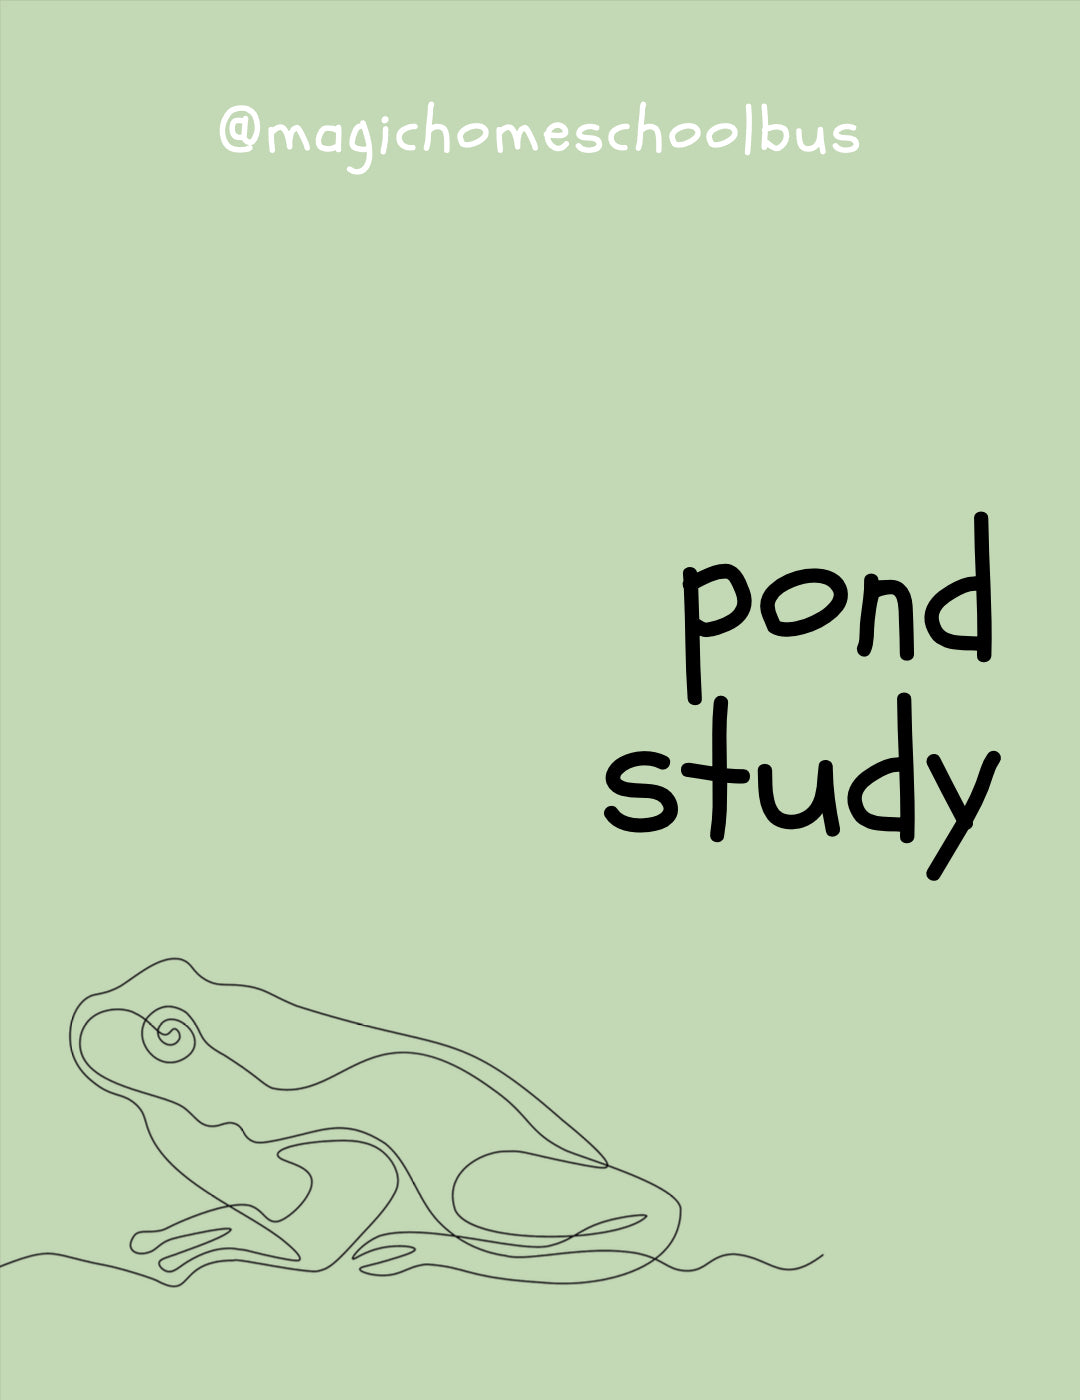 Magic Homeschool Bus - Pond Study